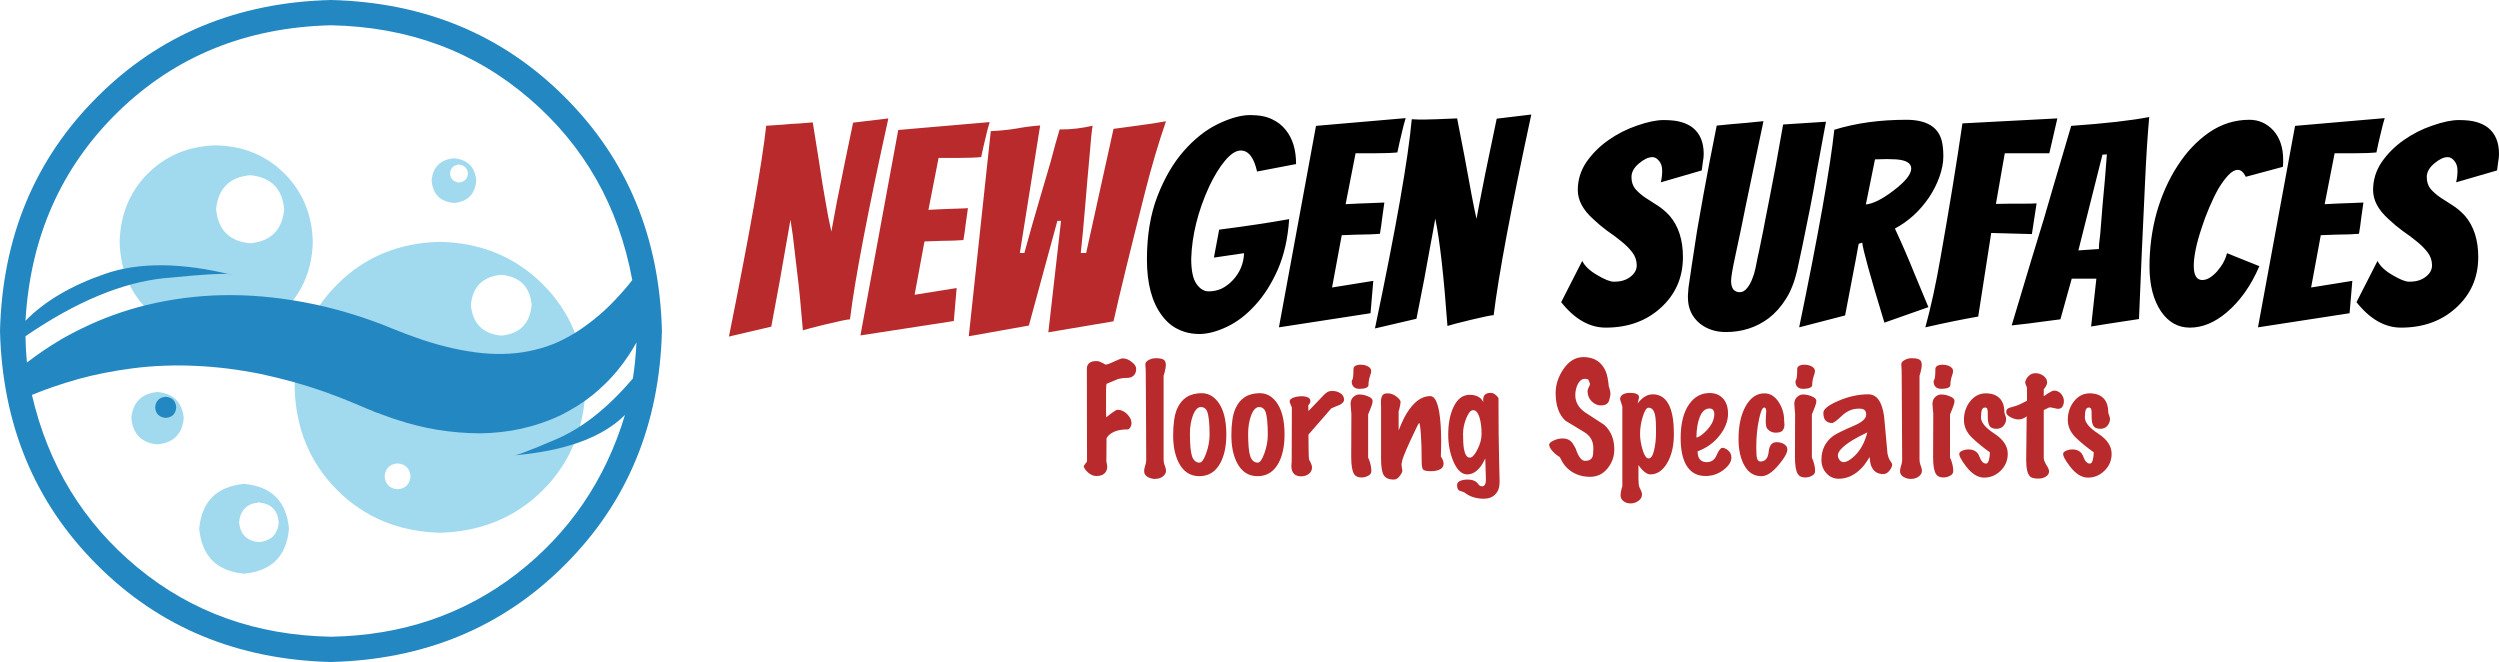 Newgen Surfaces Flooring Specialists Logo